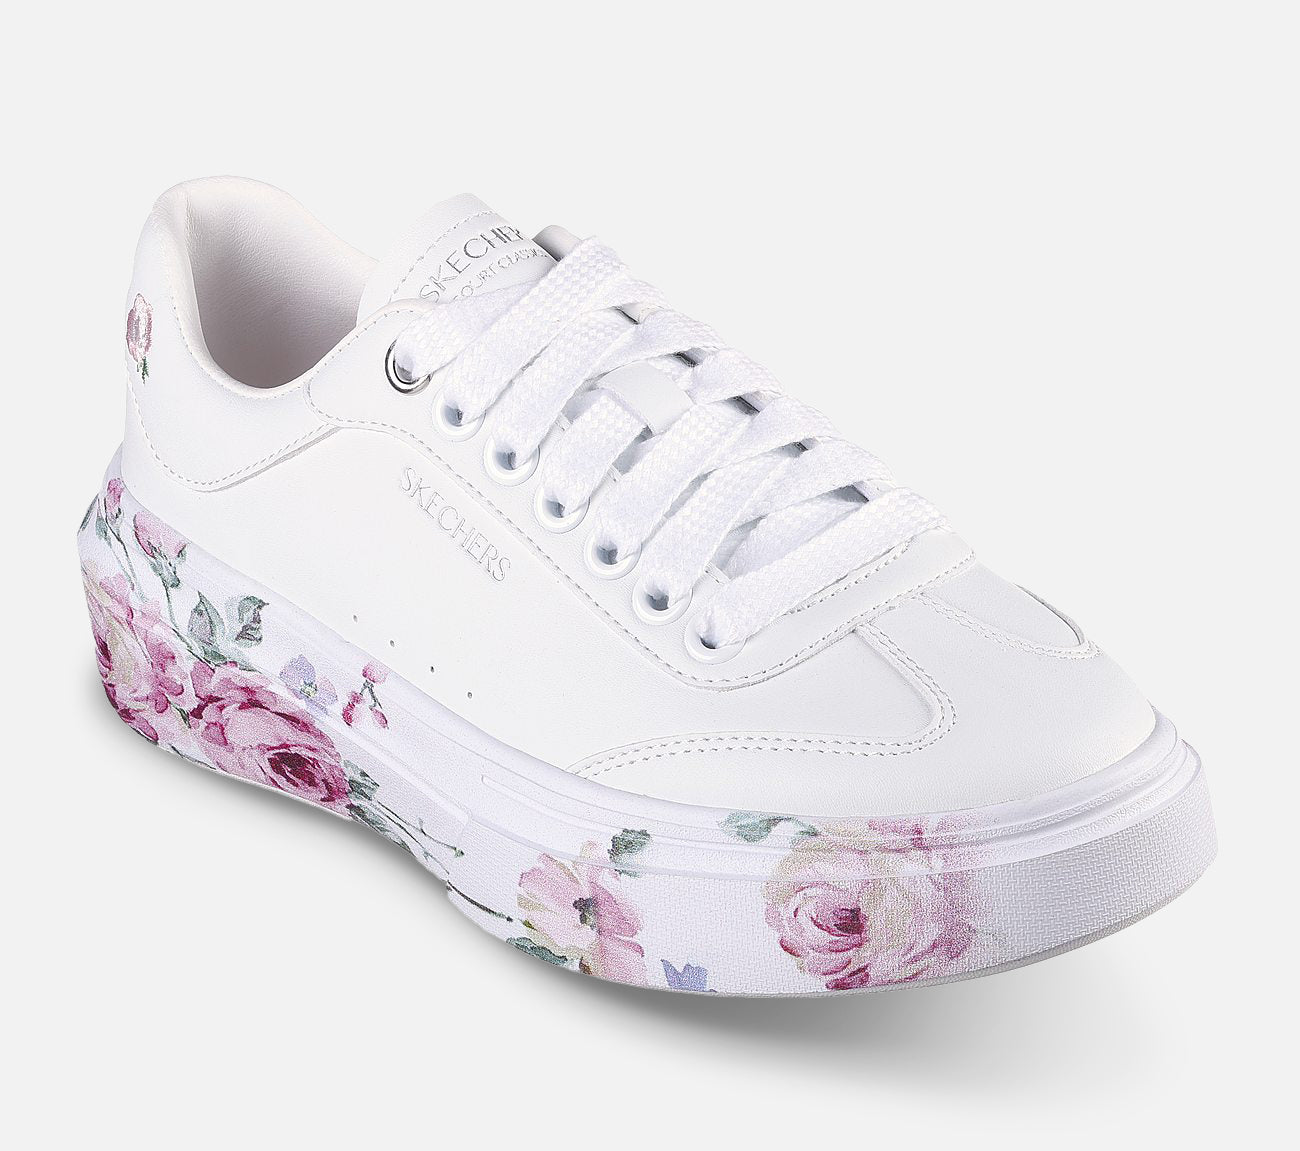 Cordova Classic - Painted Florals Shoe Skechers